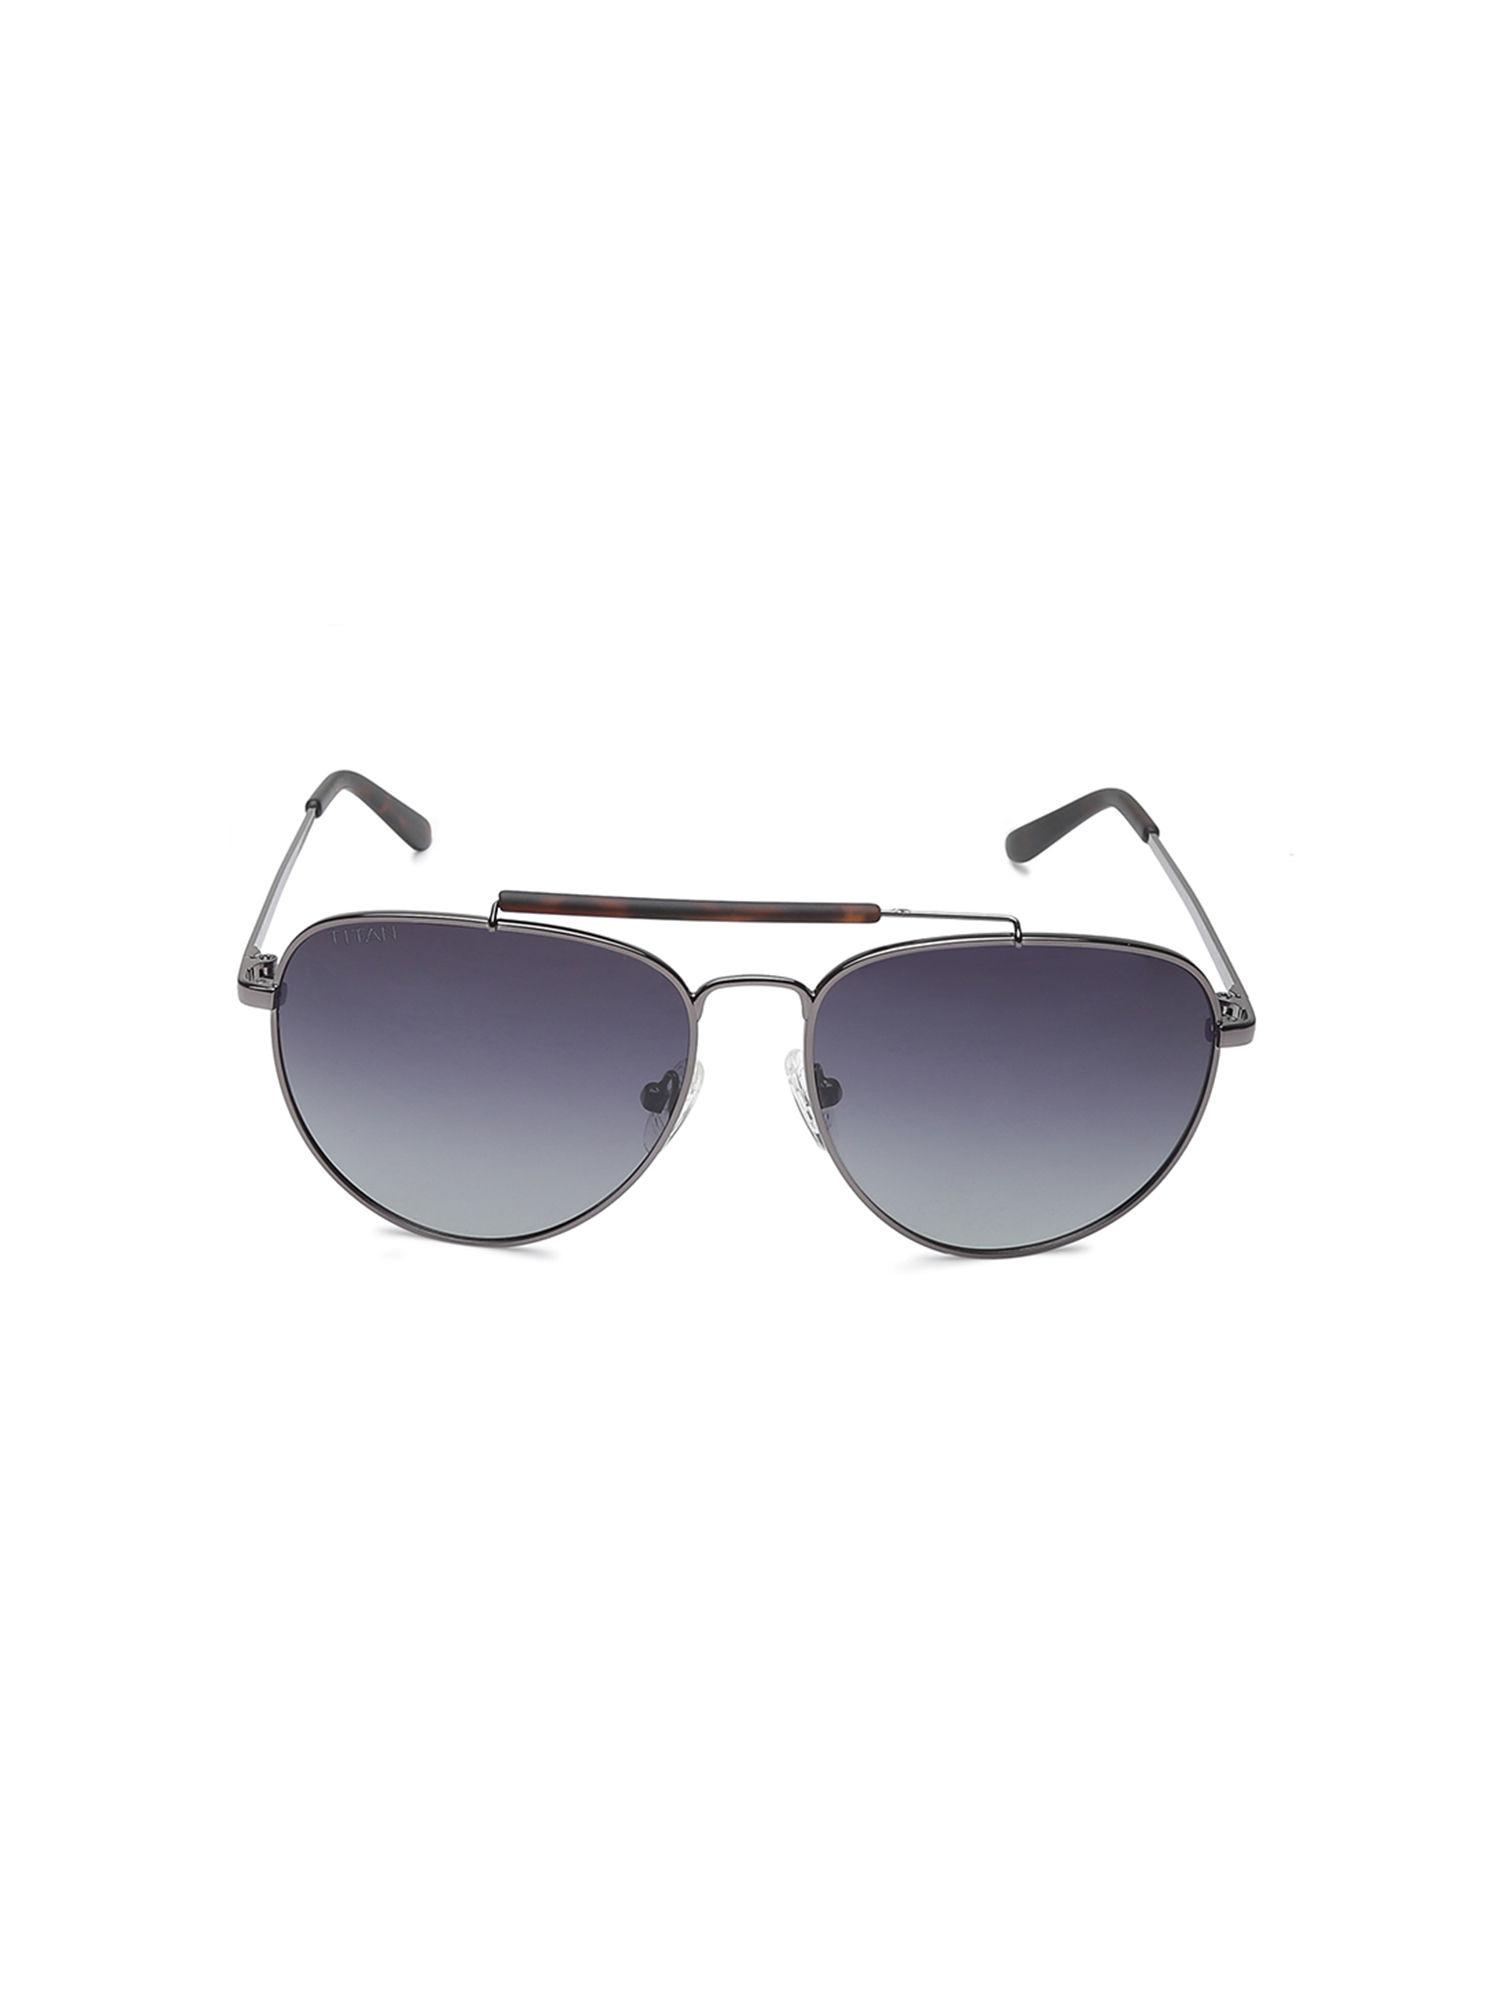 grey aviator sunglasses (gc343bk2pv)